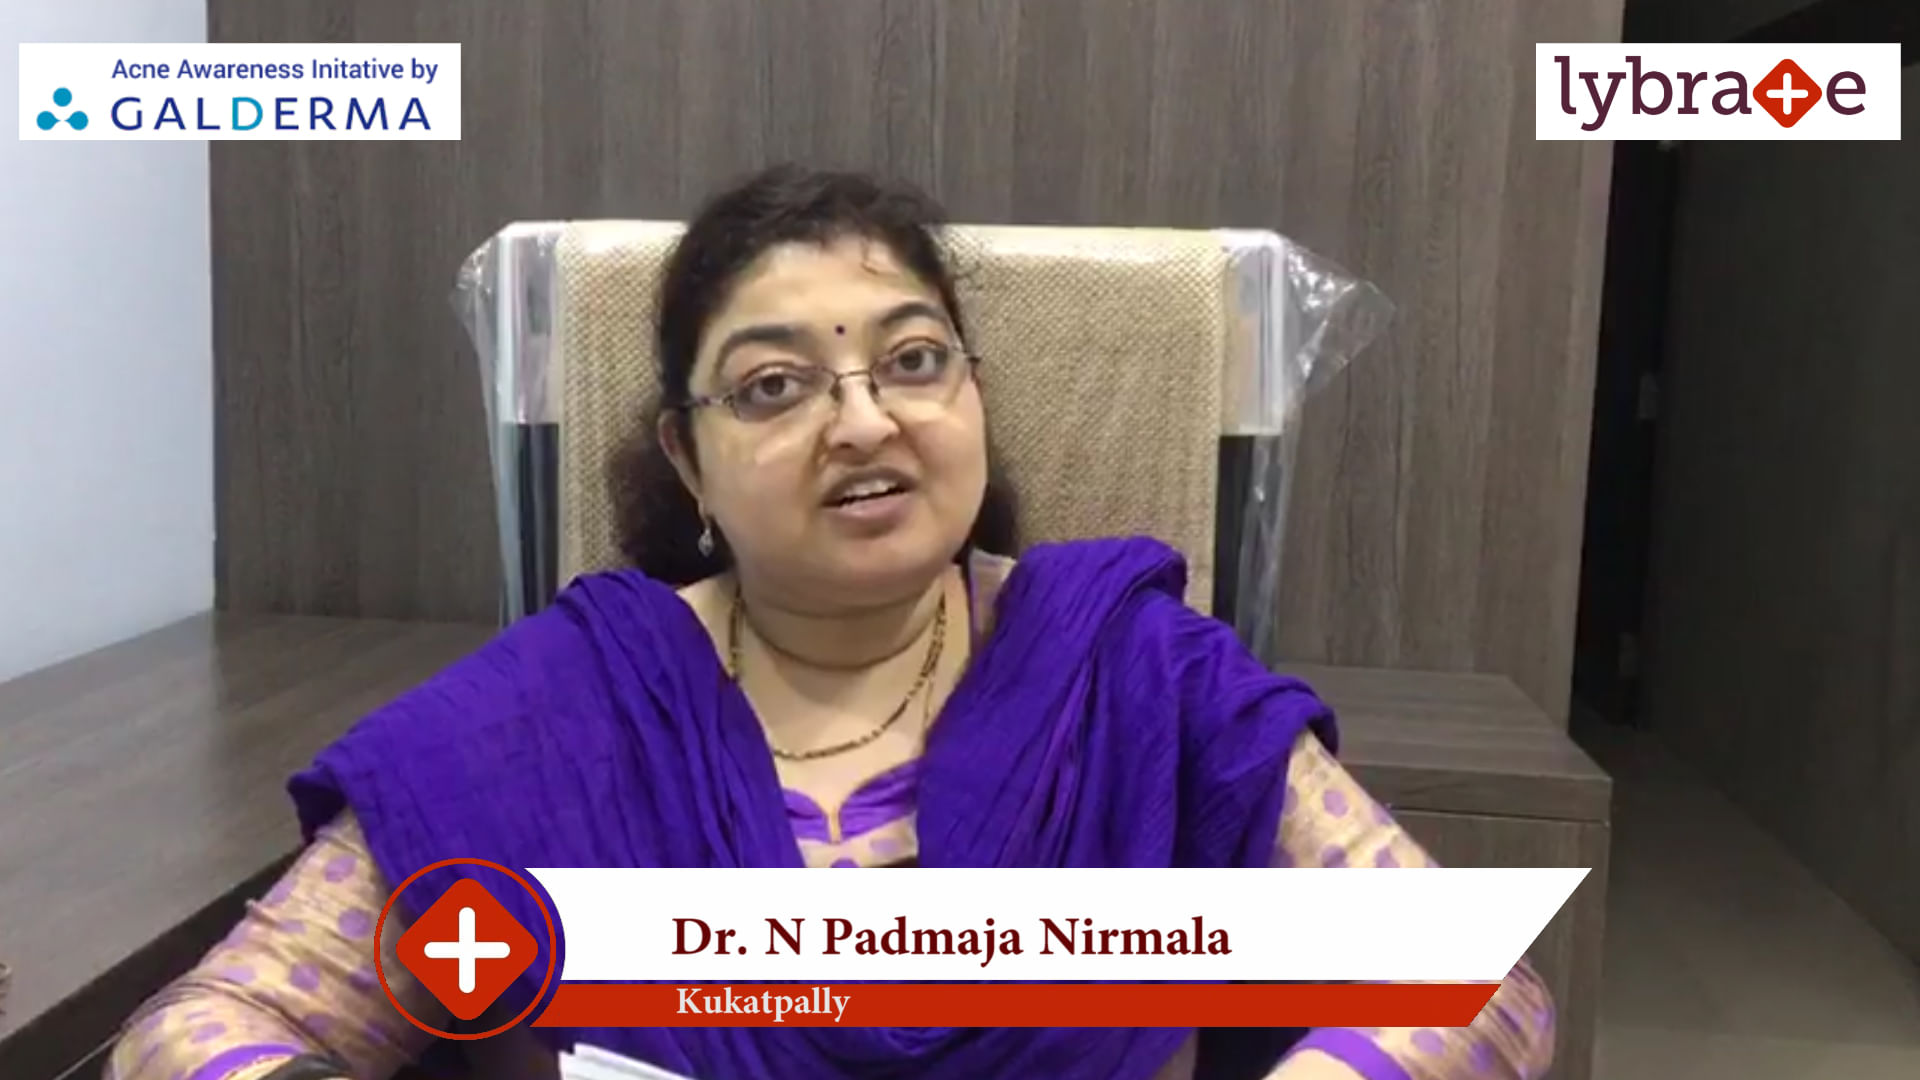 Lybrate | Dr. N Padmaja Nirmala speaks on IMPORTANCE OF TREATING ACNE EARLY